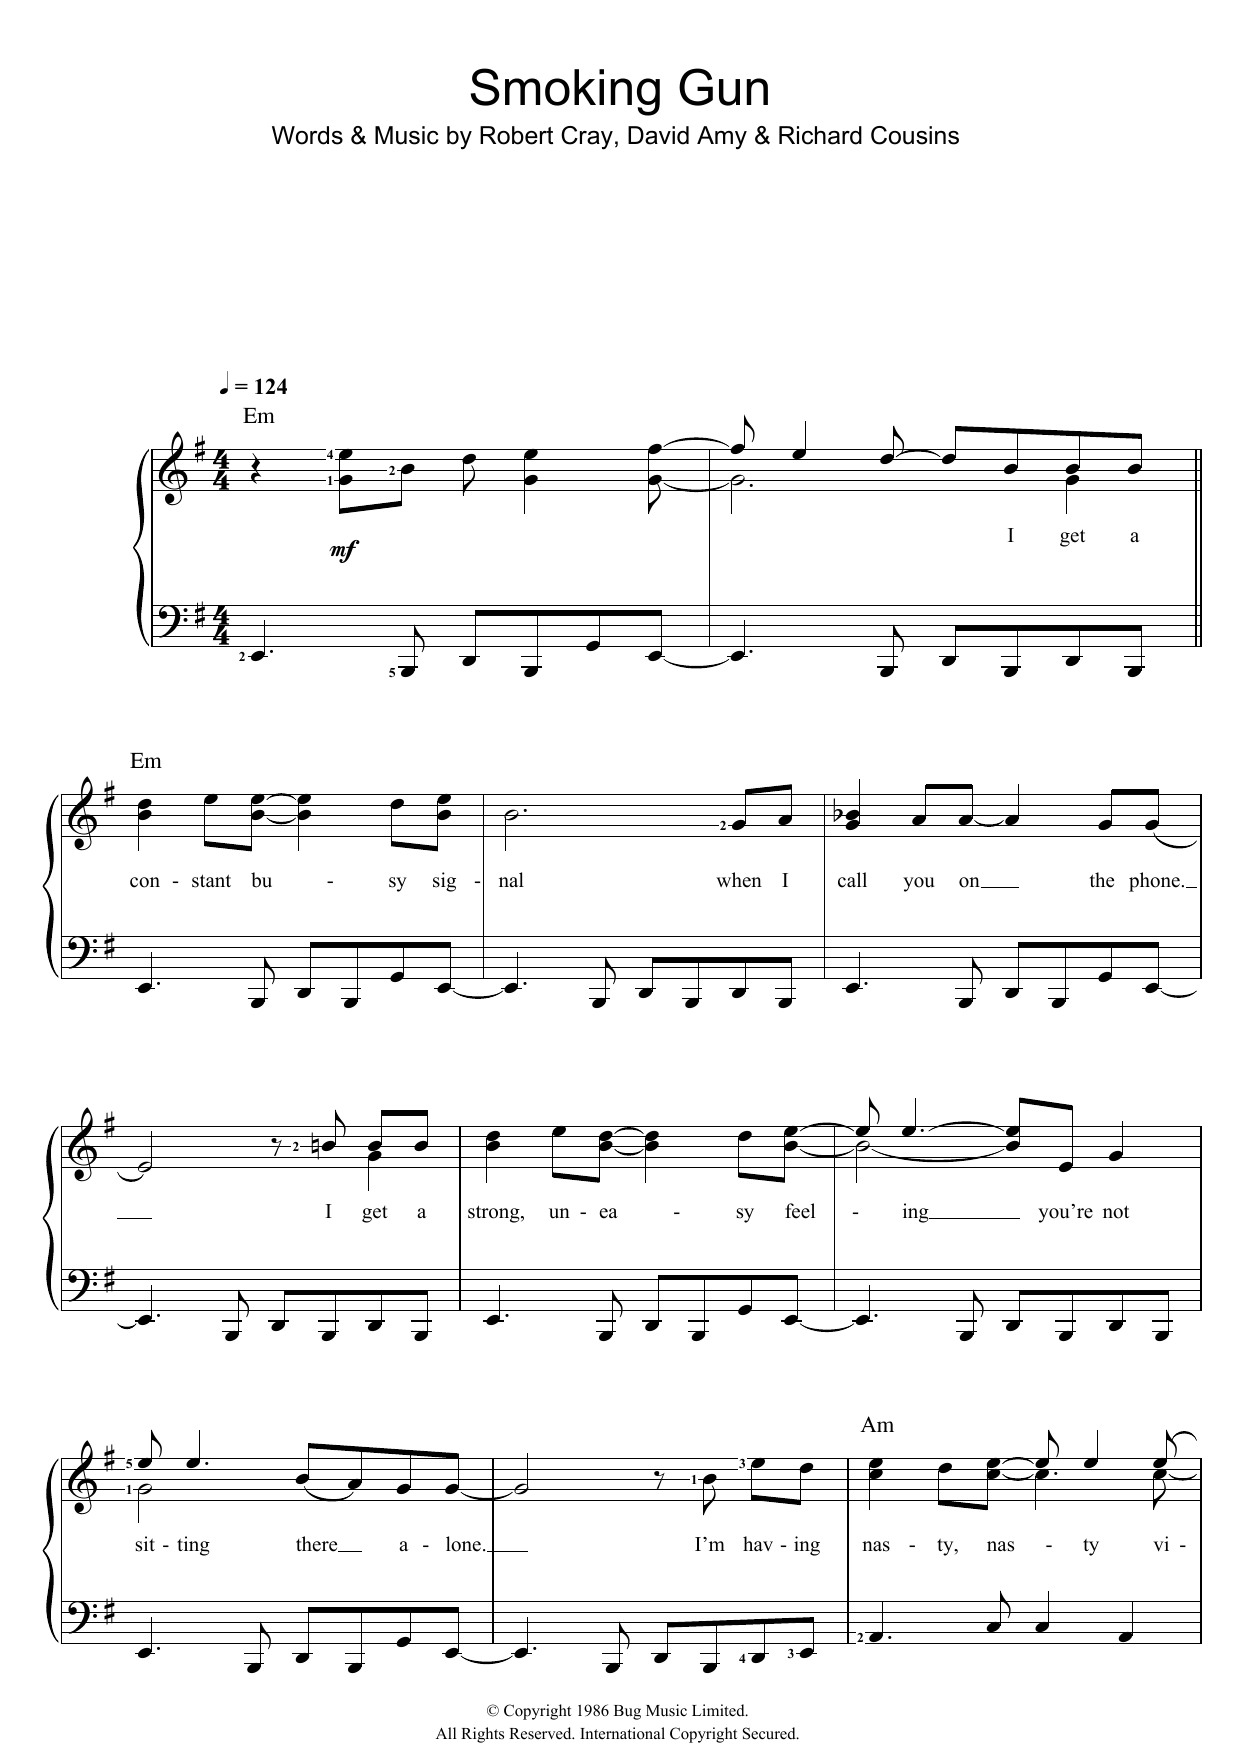 Robert Cray Smoking Gun Sheet Music Notes & Chords for Piano, Vocal & Guitar (Right-Hand Melody) - Download or Print PDF